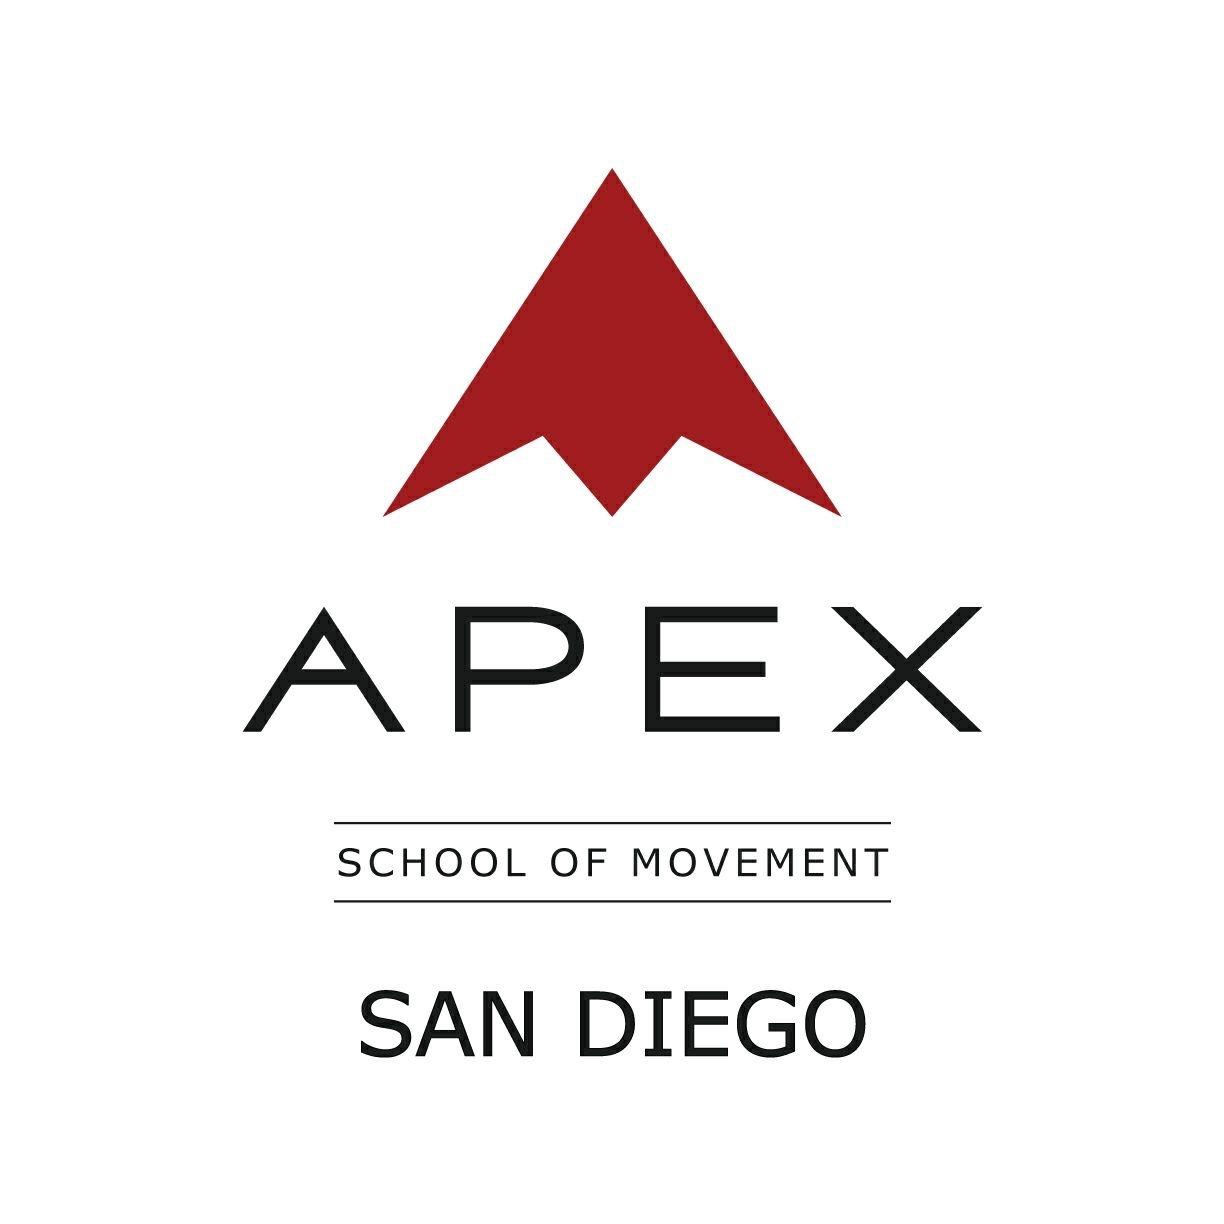 APEX School of Movement, San Diego APEX School of Movement San Diego San Diego (858)987-2355